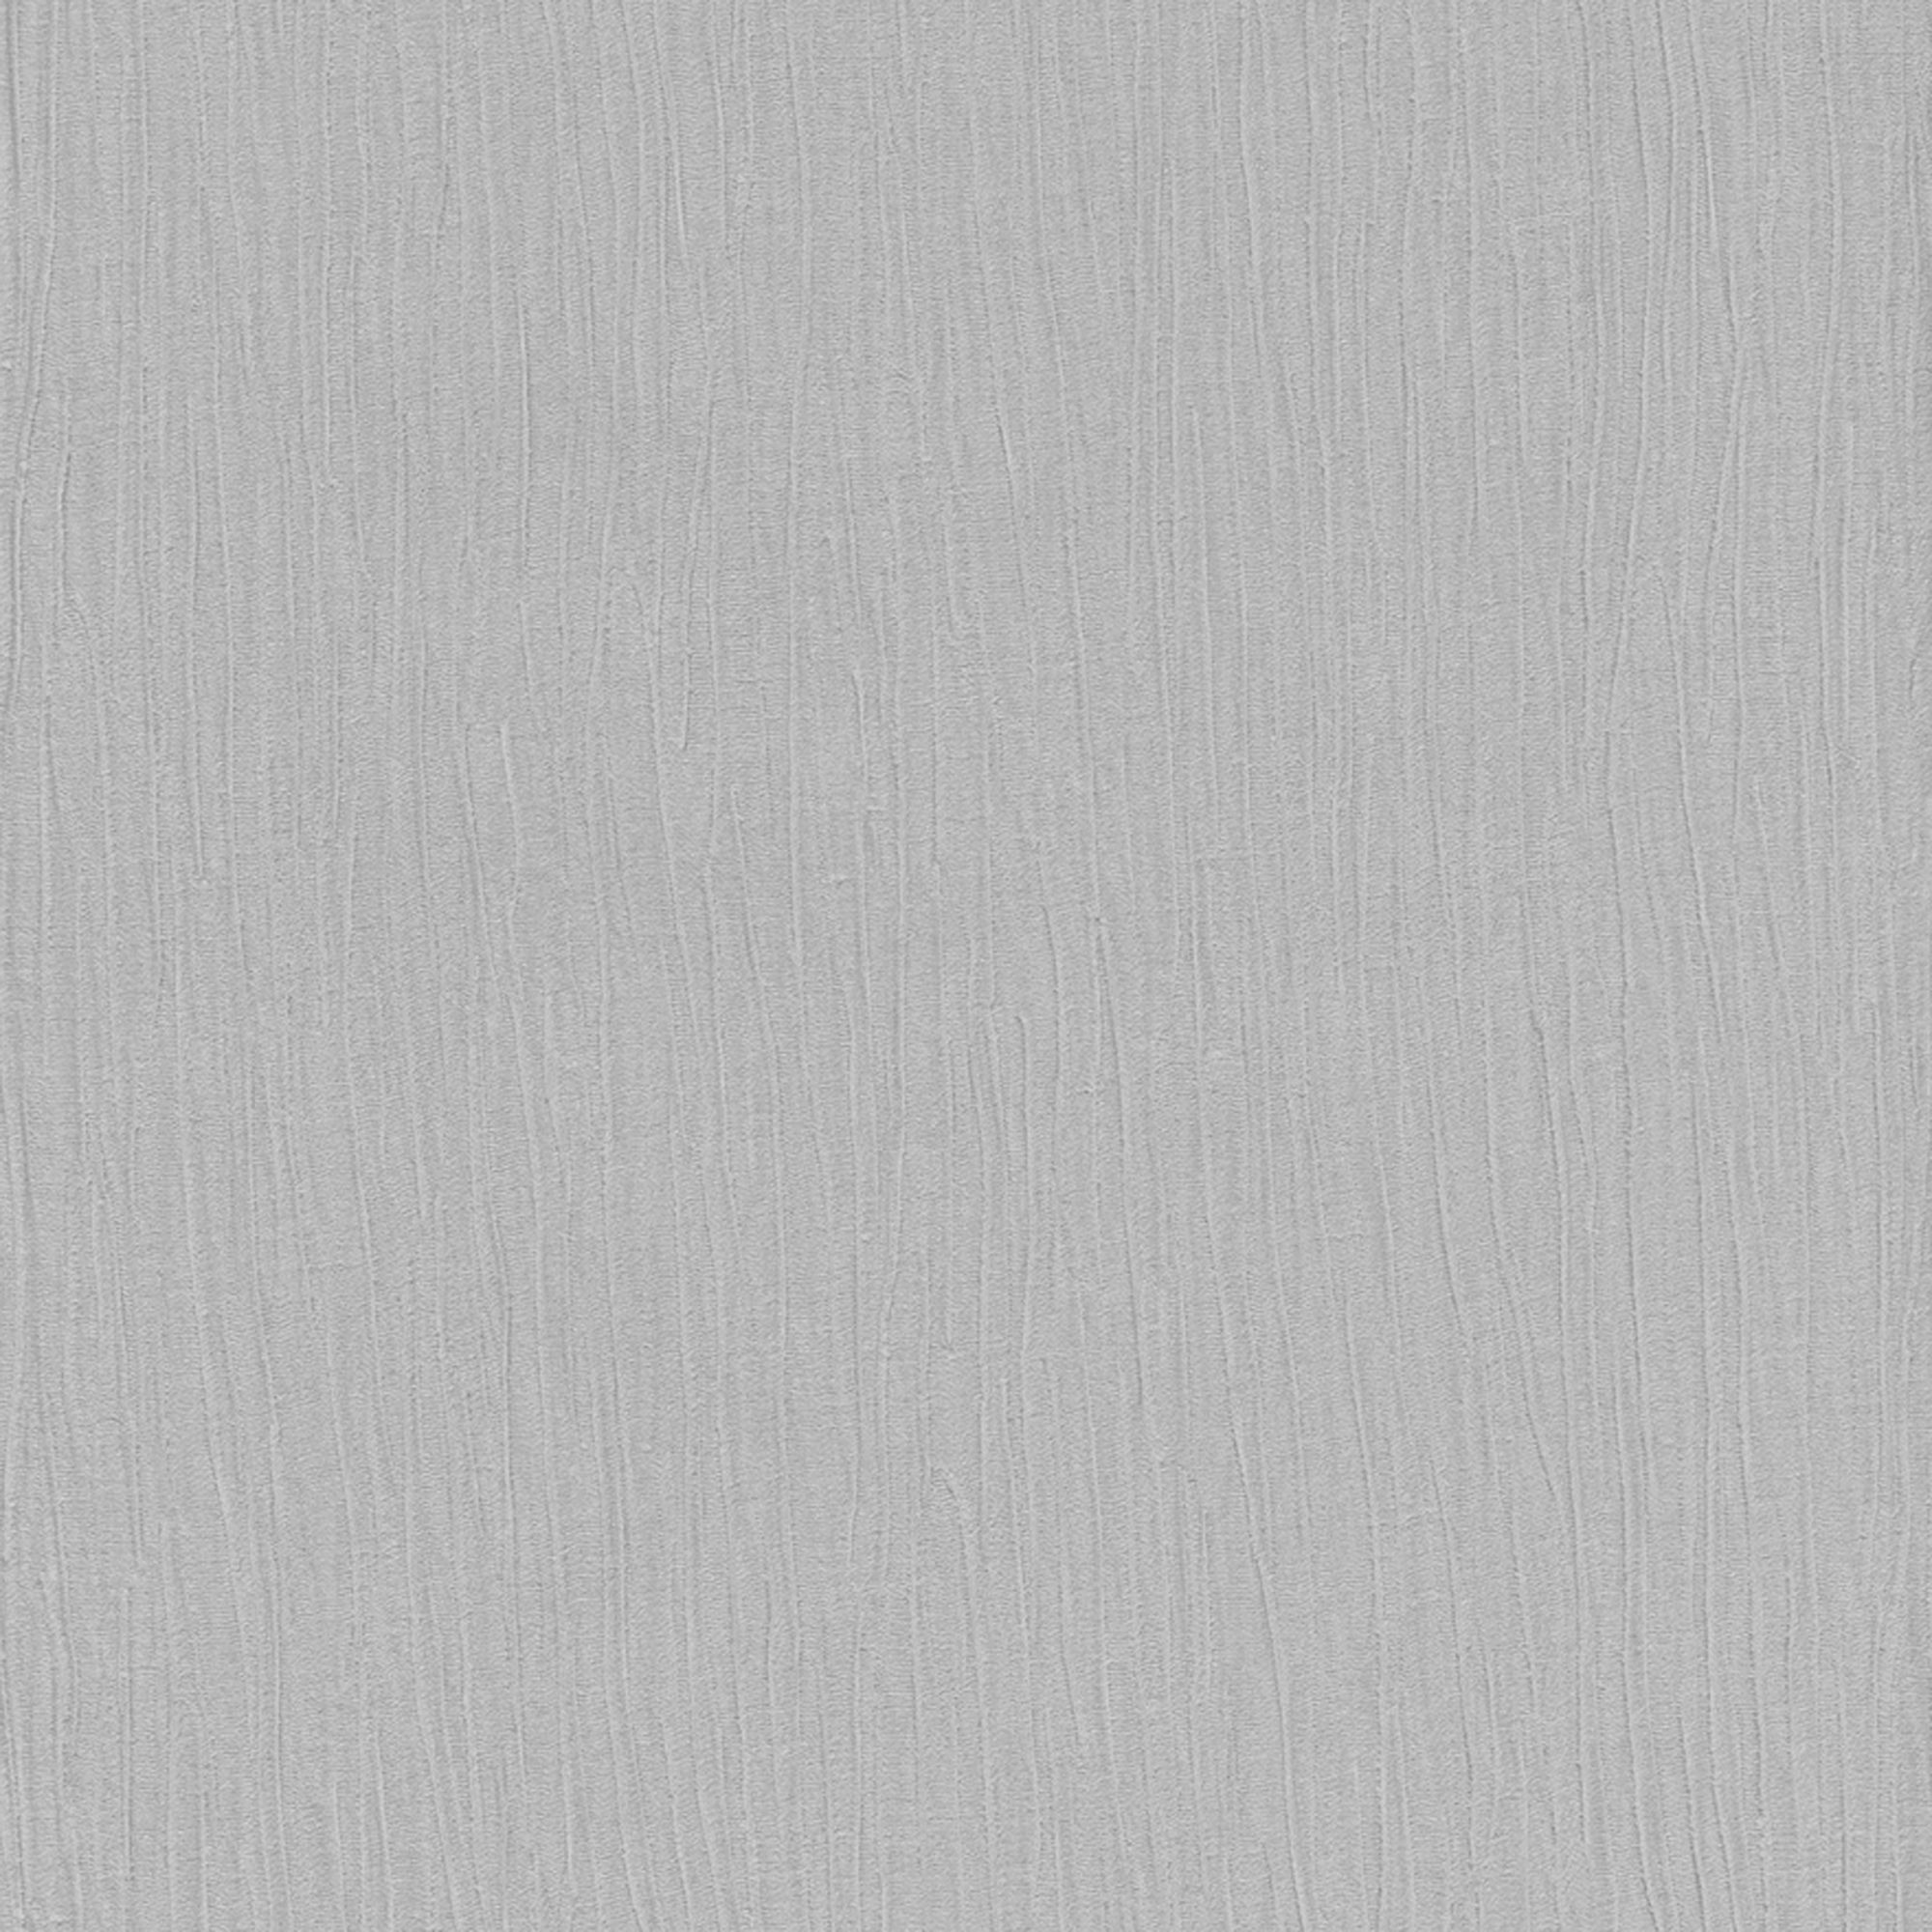 Holden Décor Loretta Grey Metallic effect Textured Wallpaper Sample